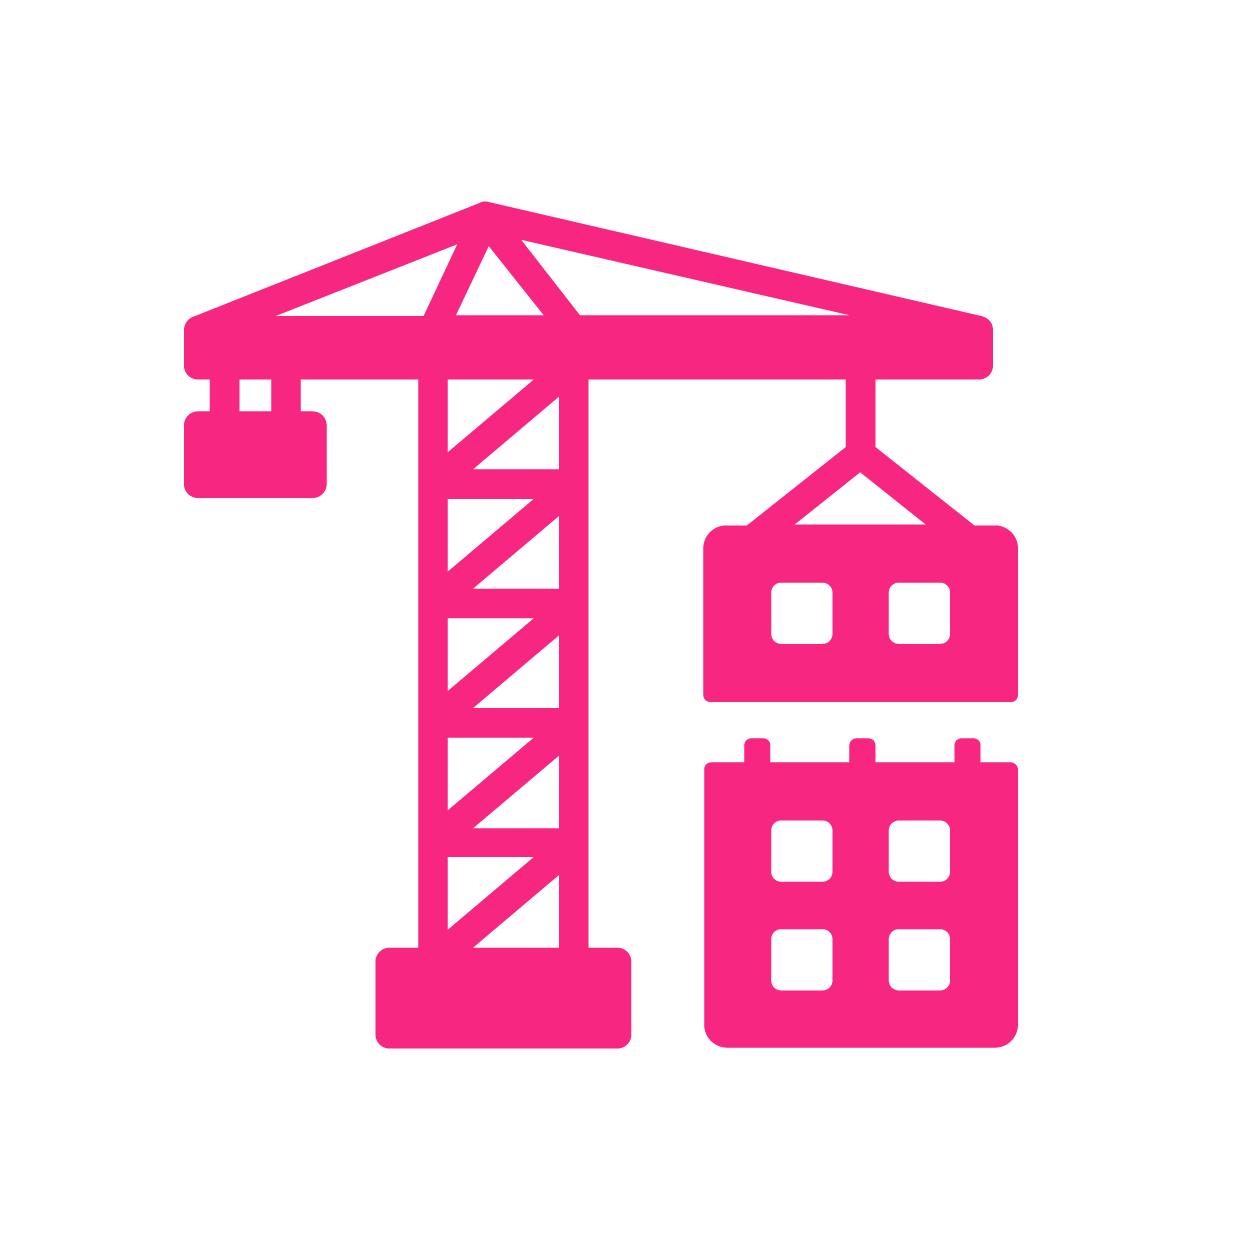 Construction PR, civil engineering PR and built environment PR probably involve cranes. I should think pink ones.